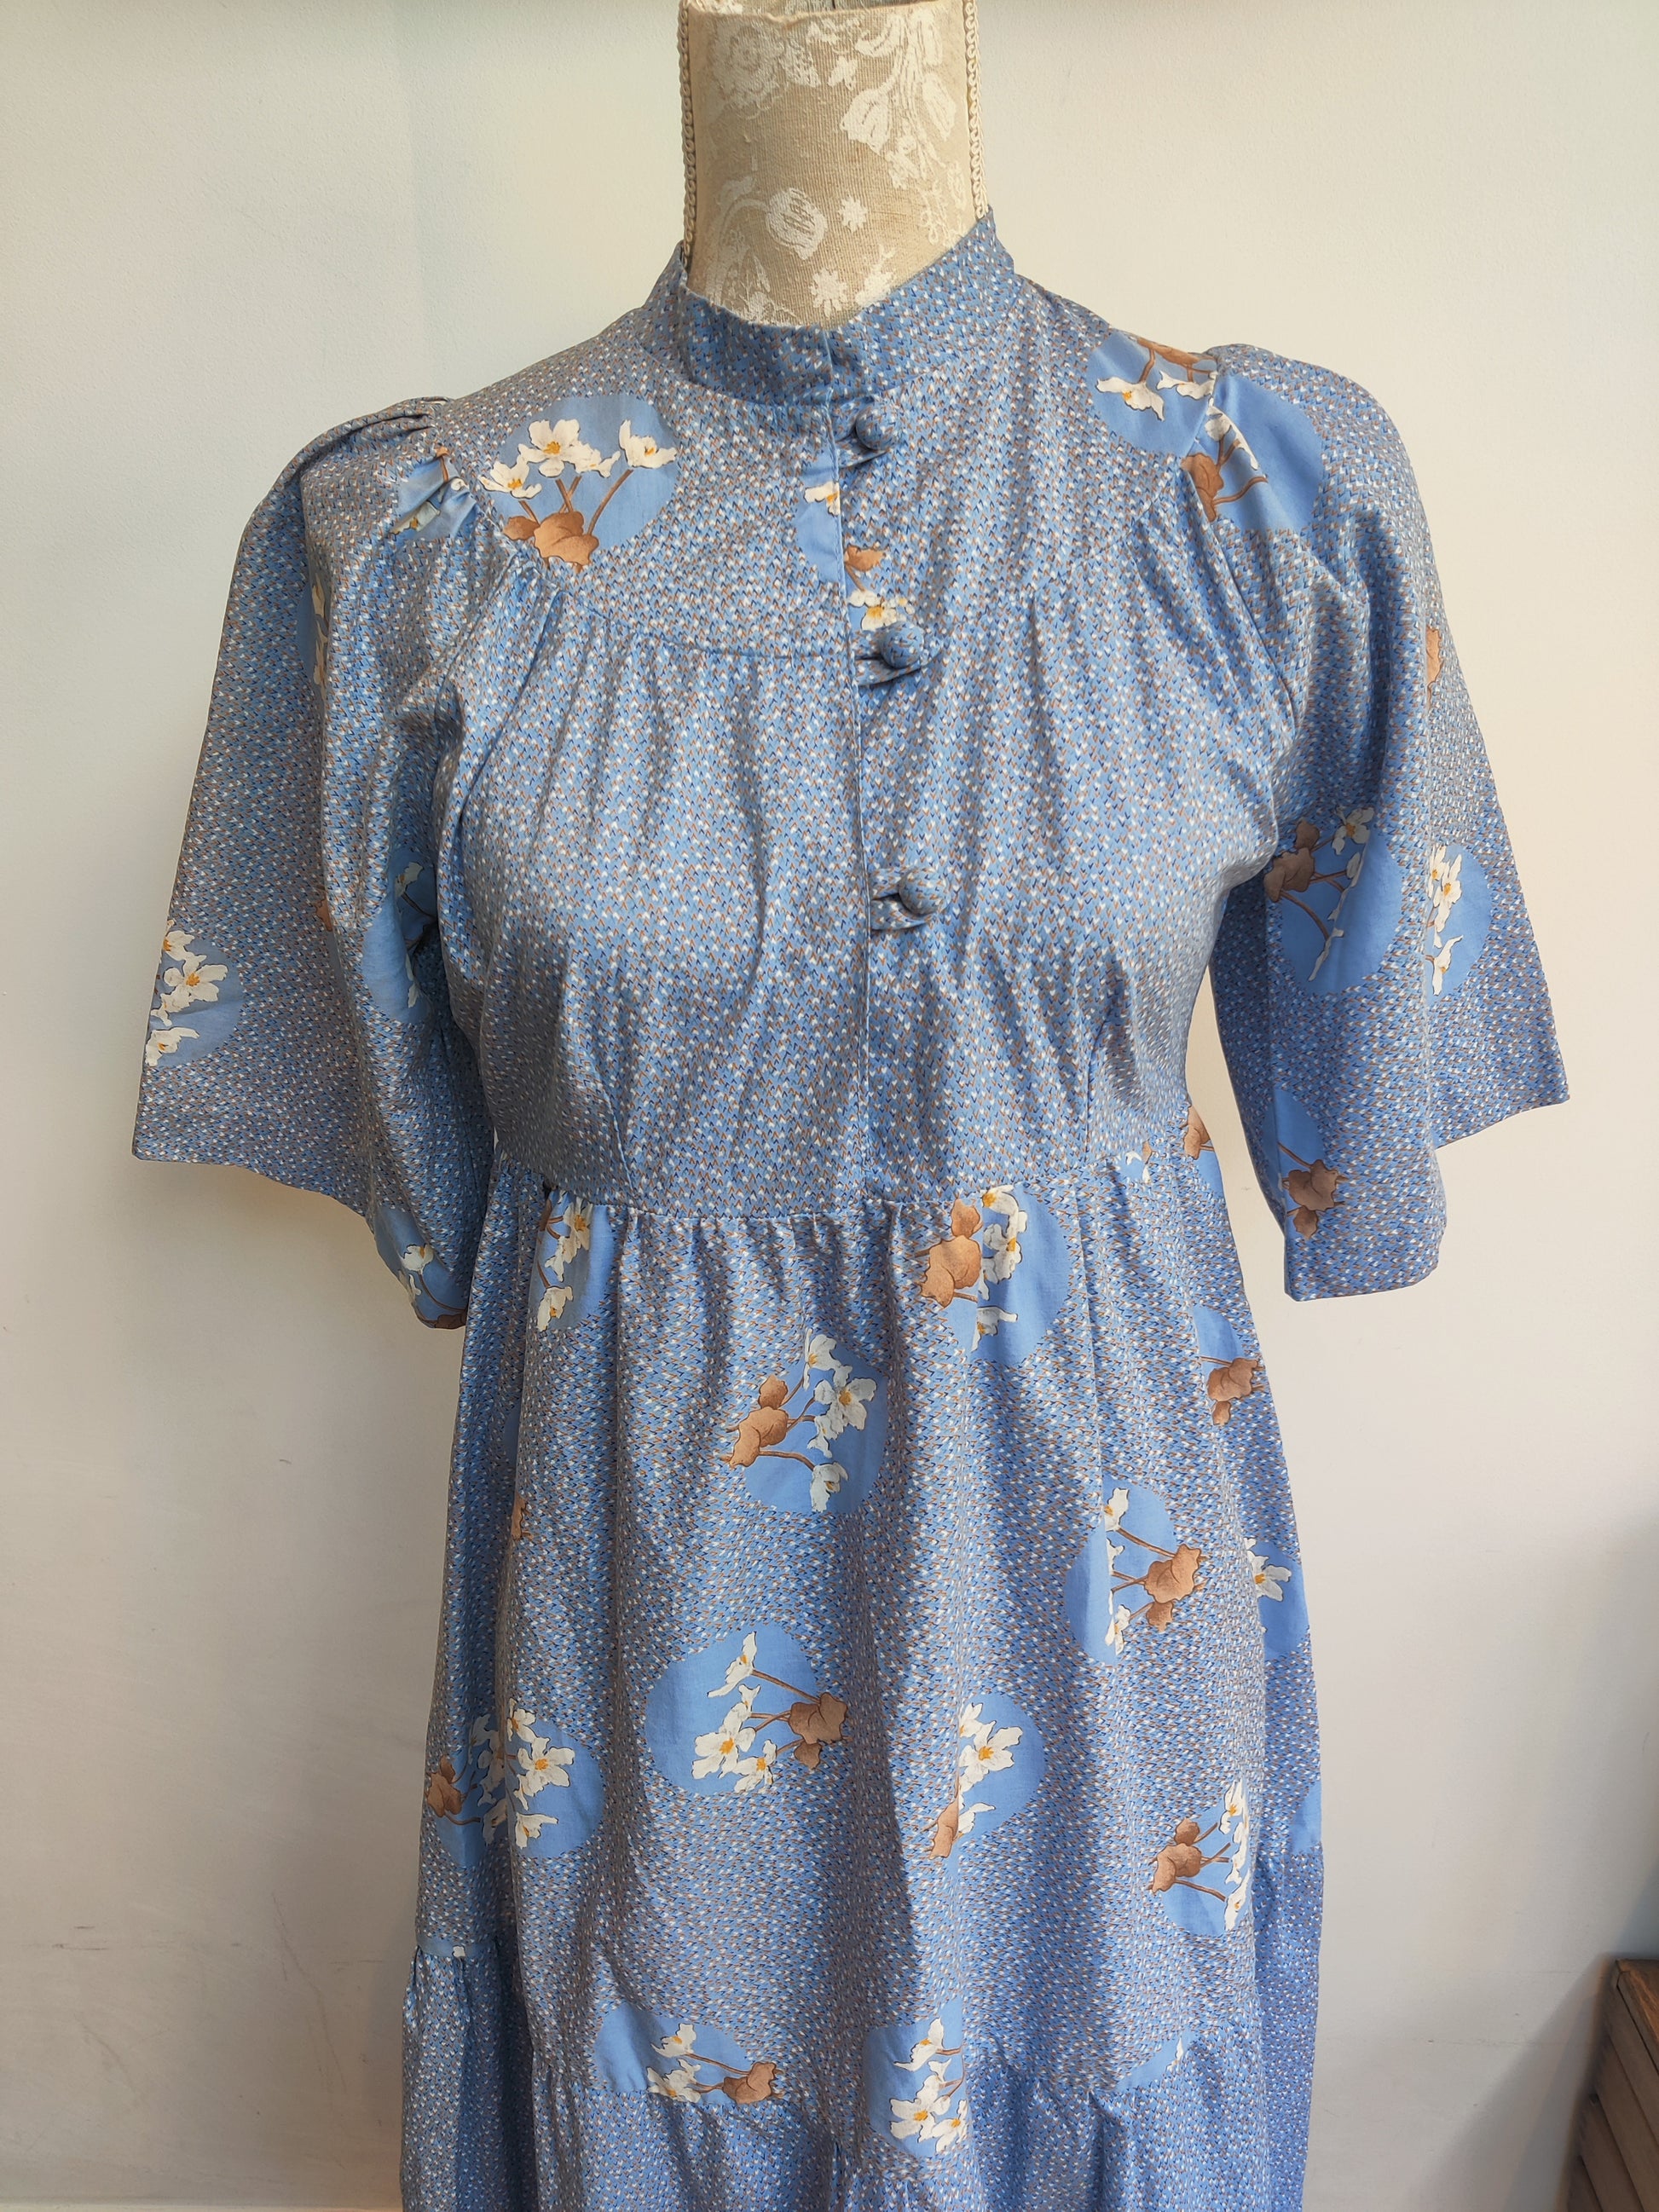 Blue vintage prairie dress